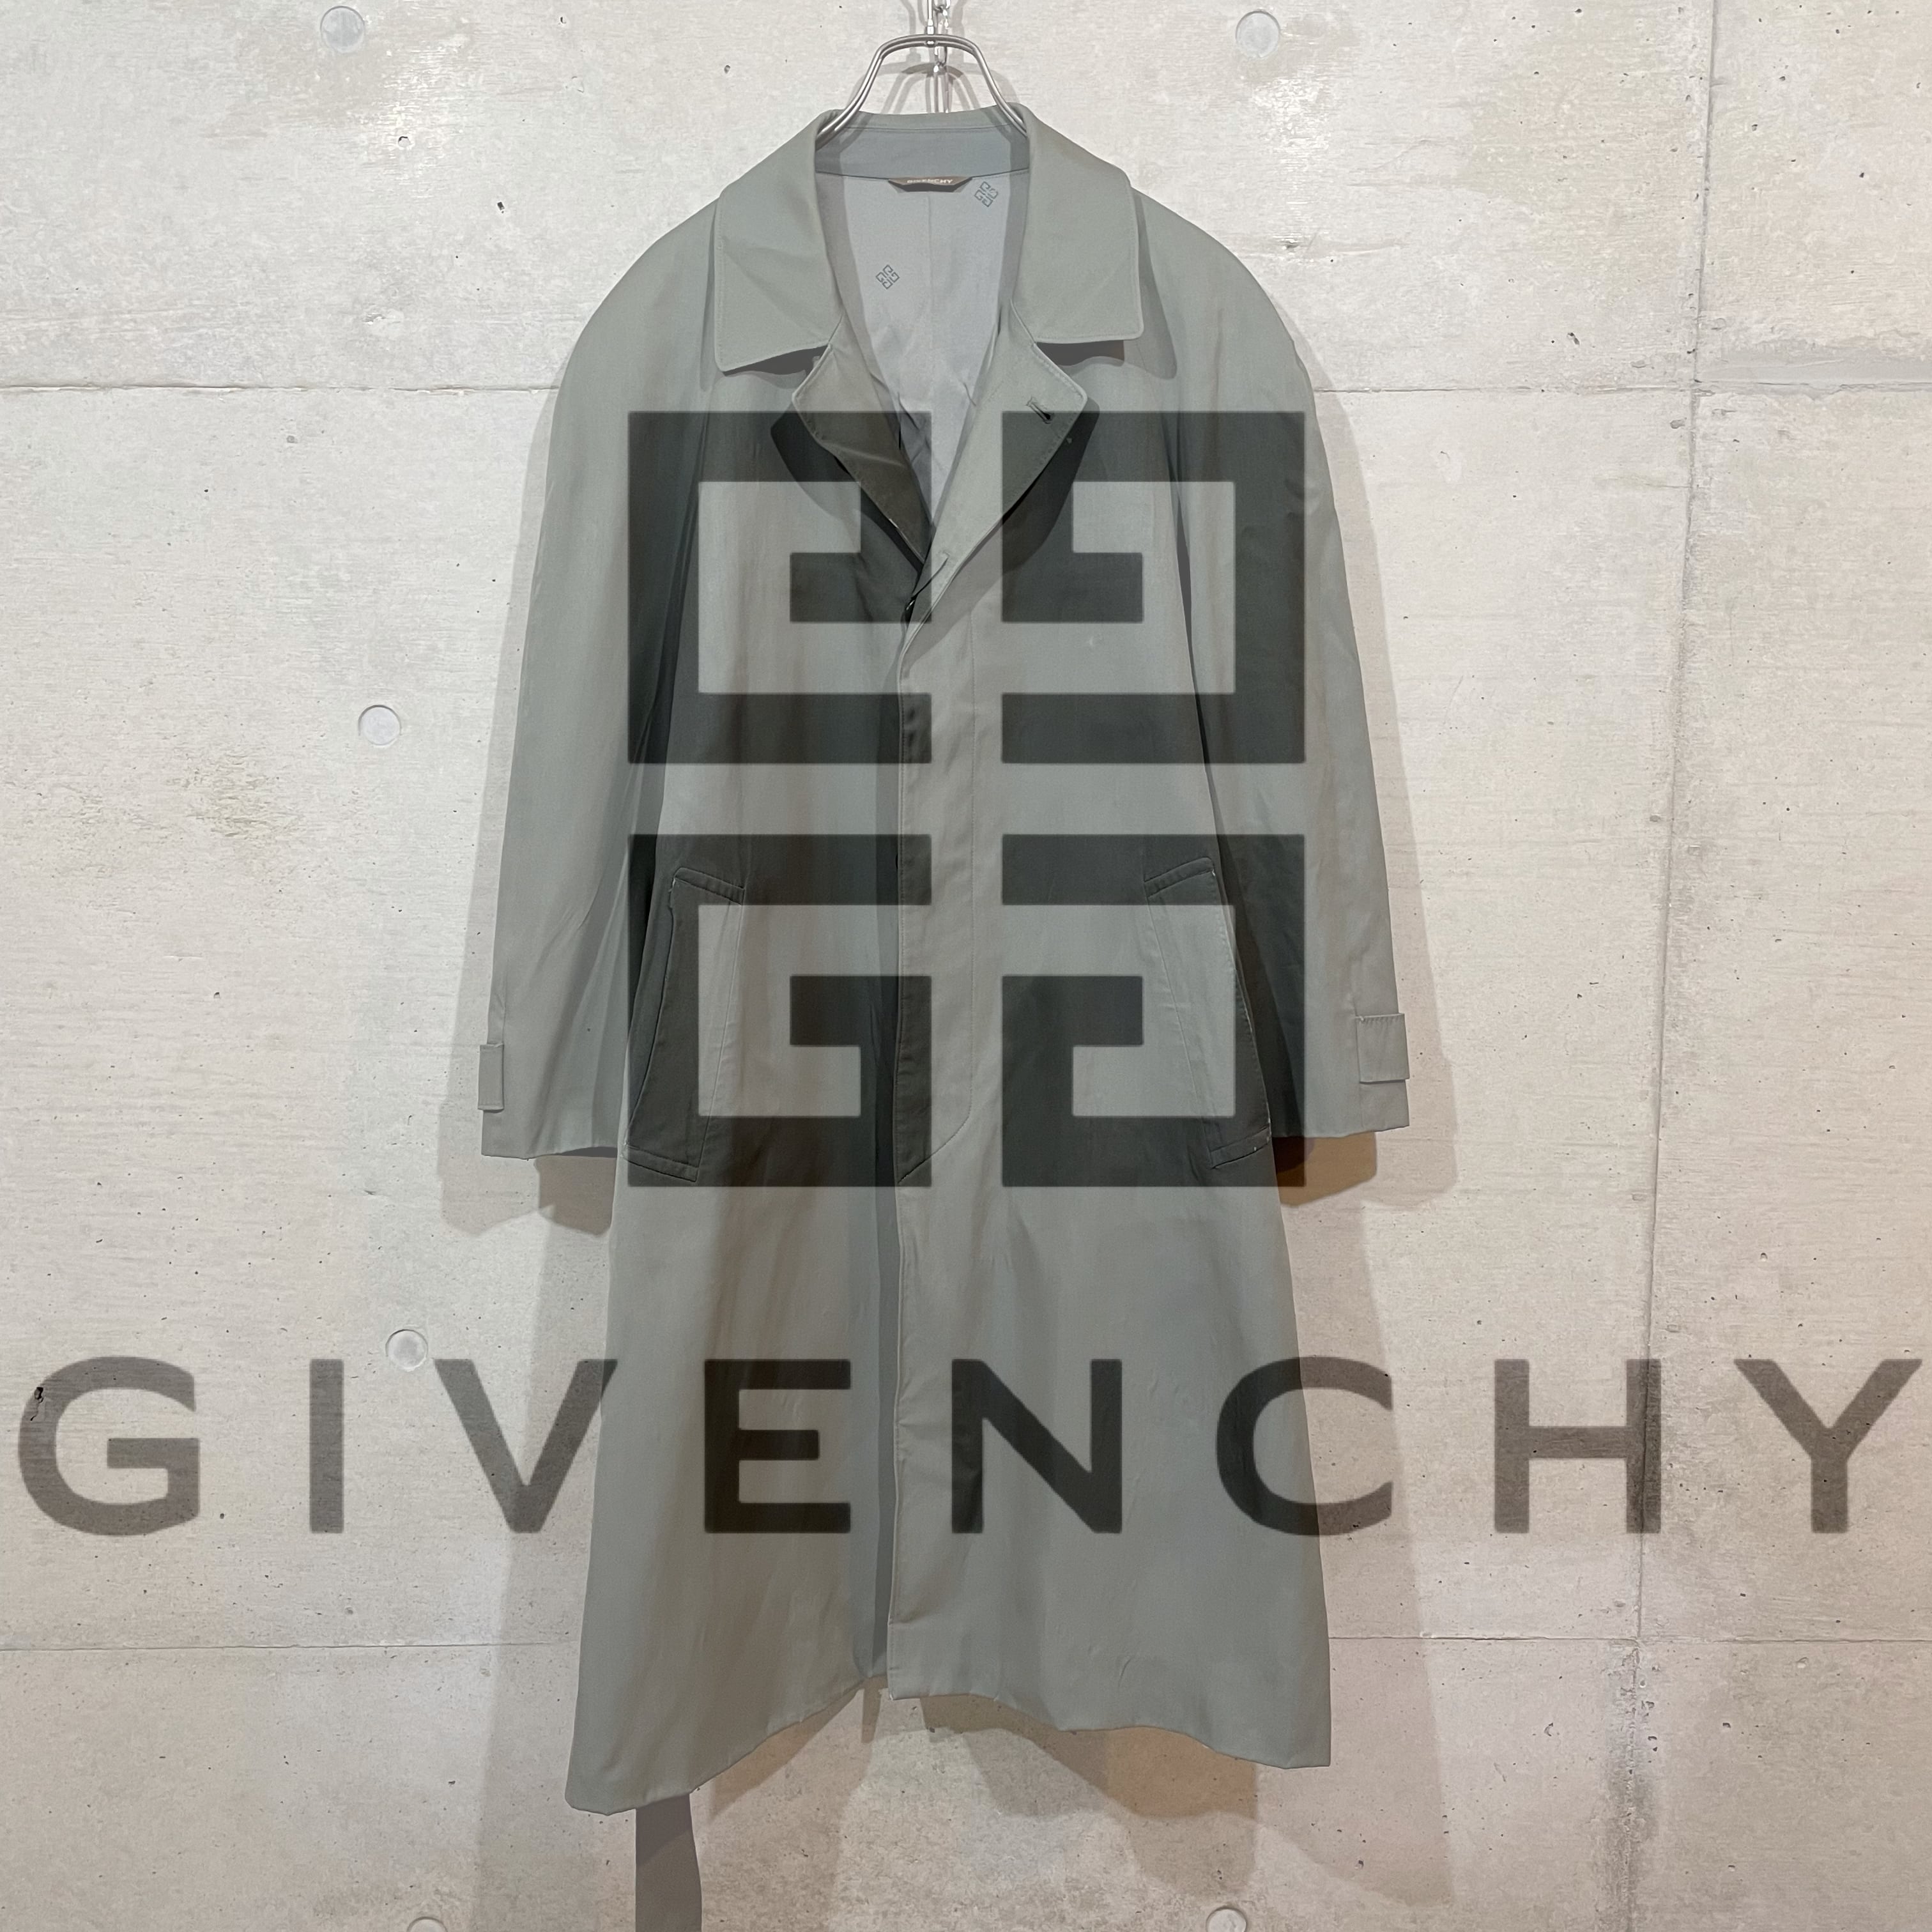 GIVENCHY】design soutien collar coat(ssize)0120/tokyo